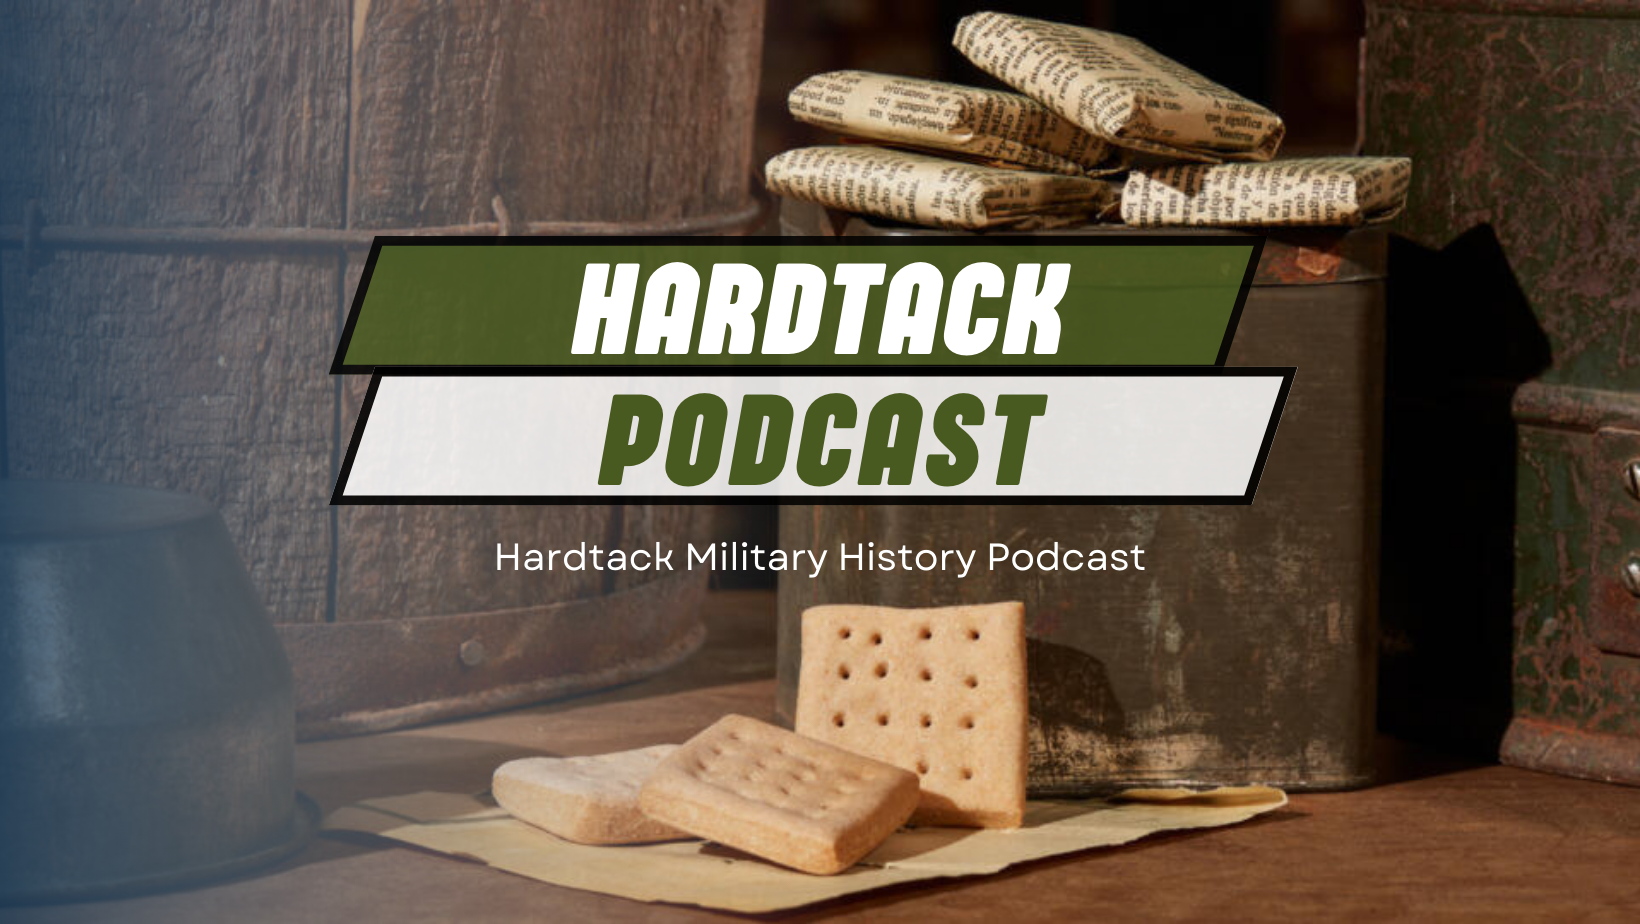 Hardtack Military History Podcast – Listen Here